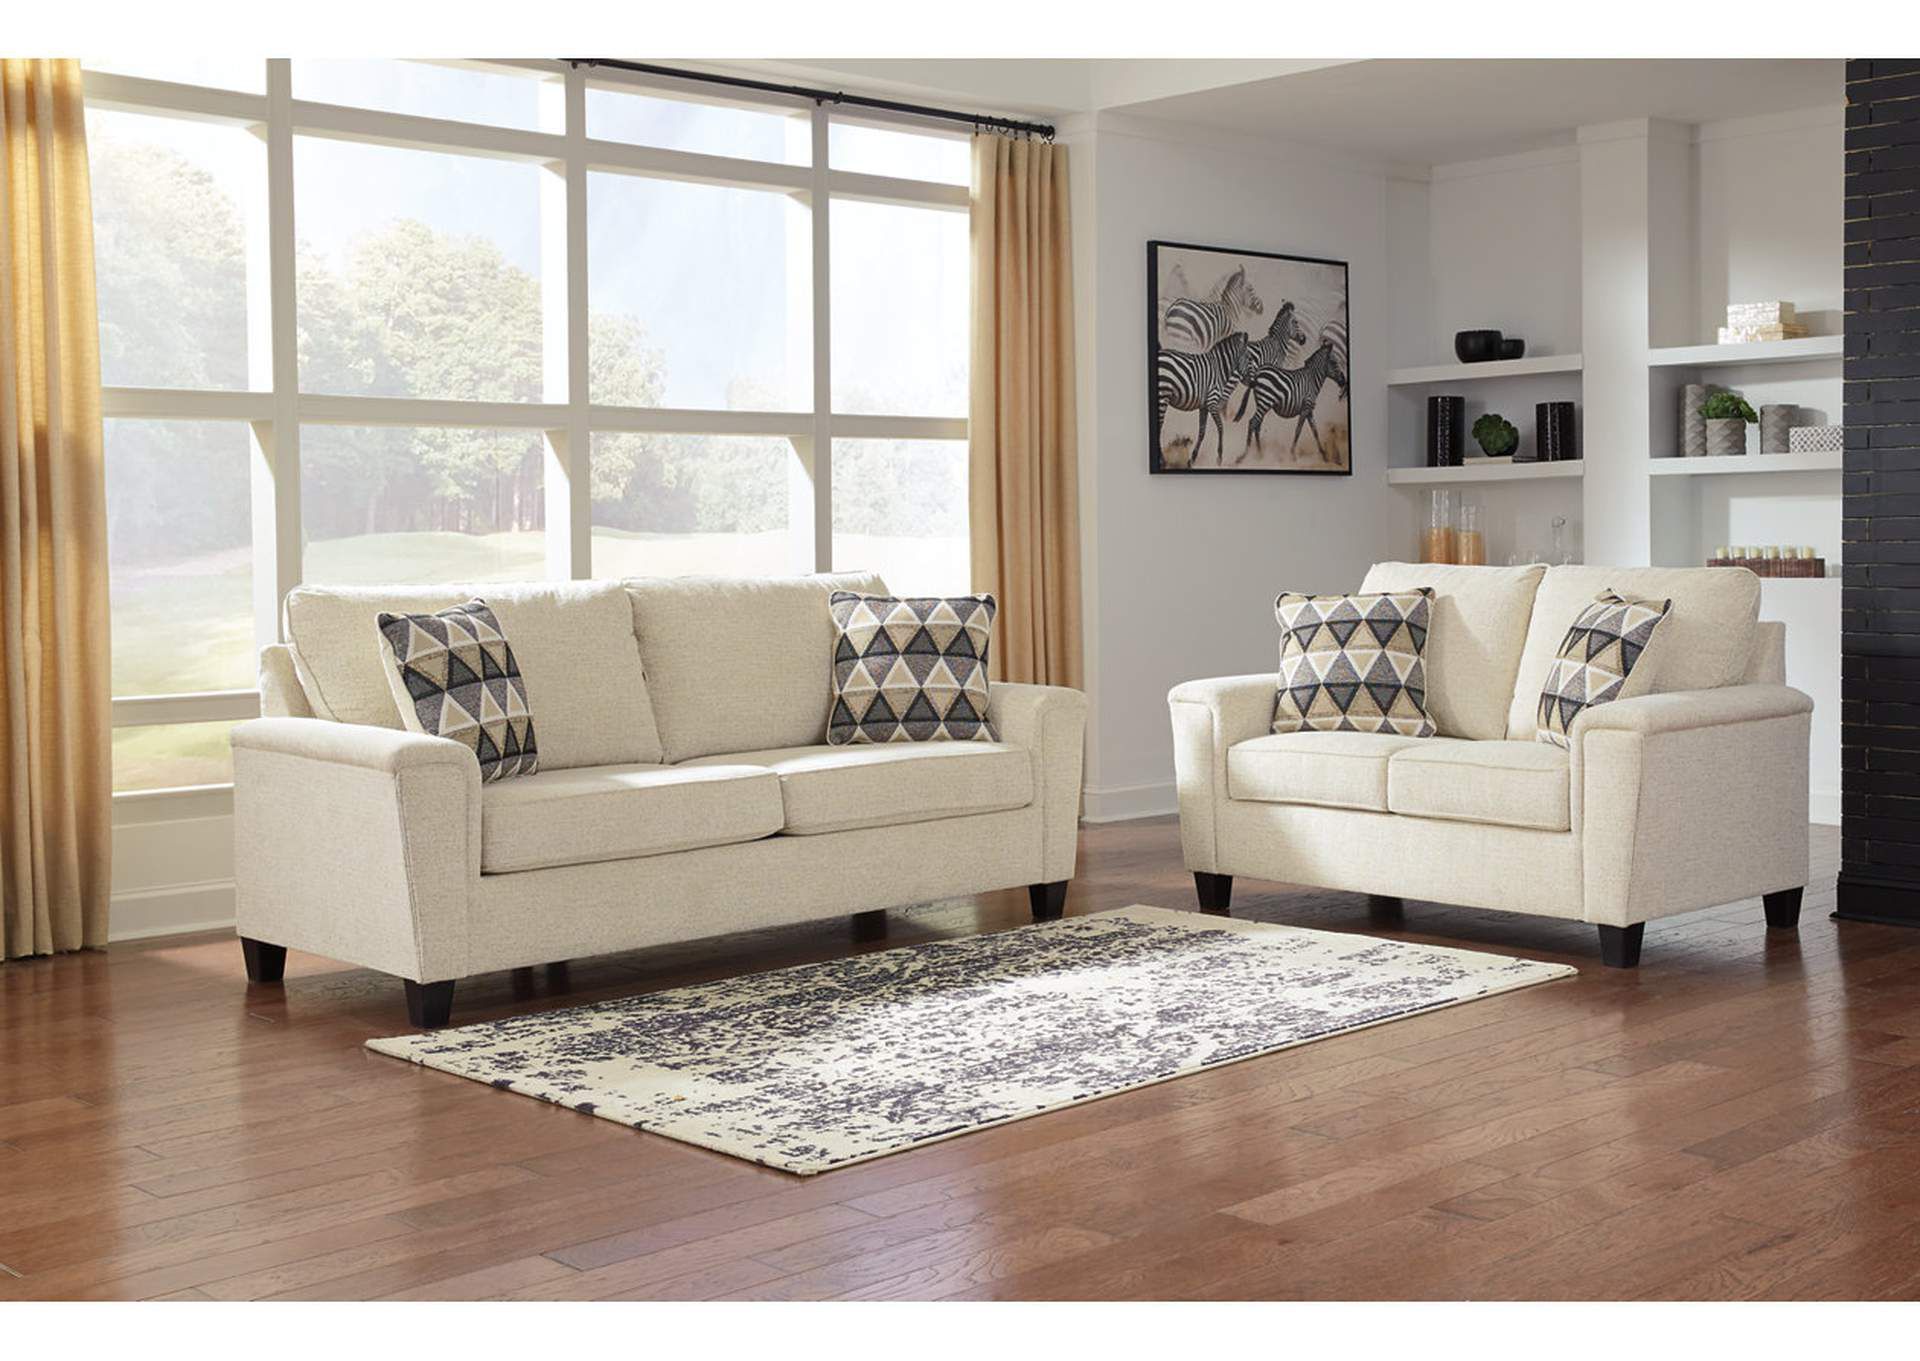 Holiday Sale, Same Day Delivery Sofa Love Seat Set, 2 Color Options Sku#1083904